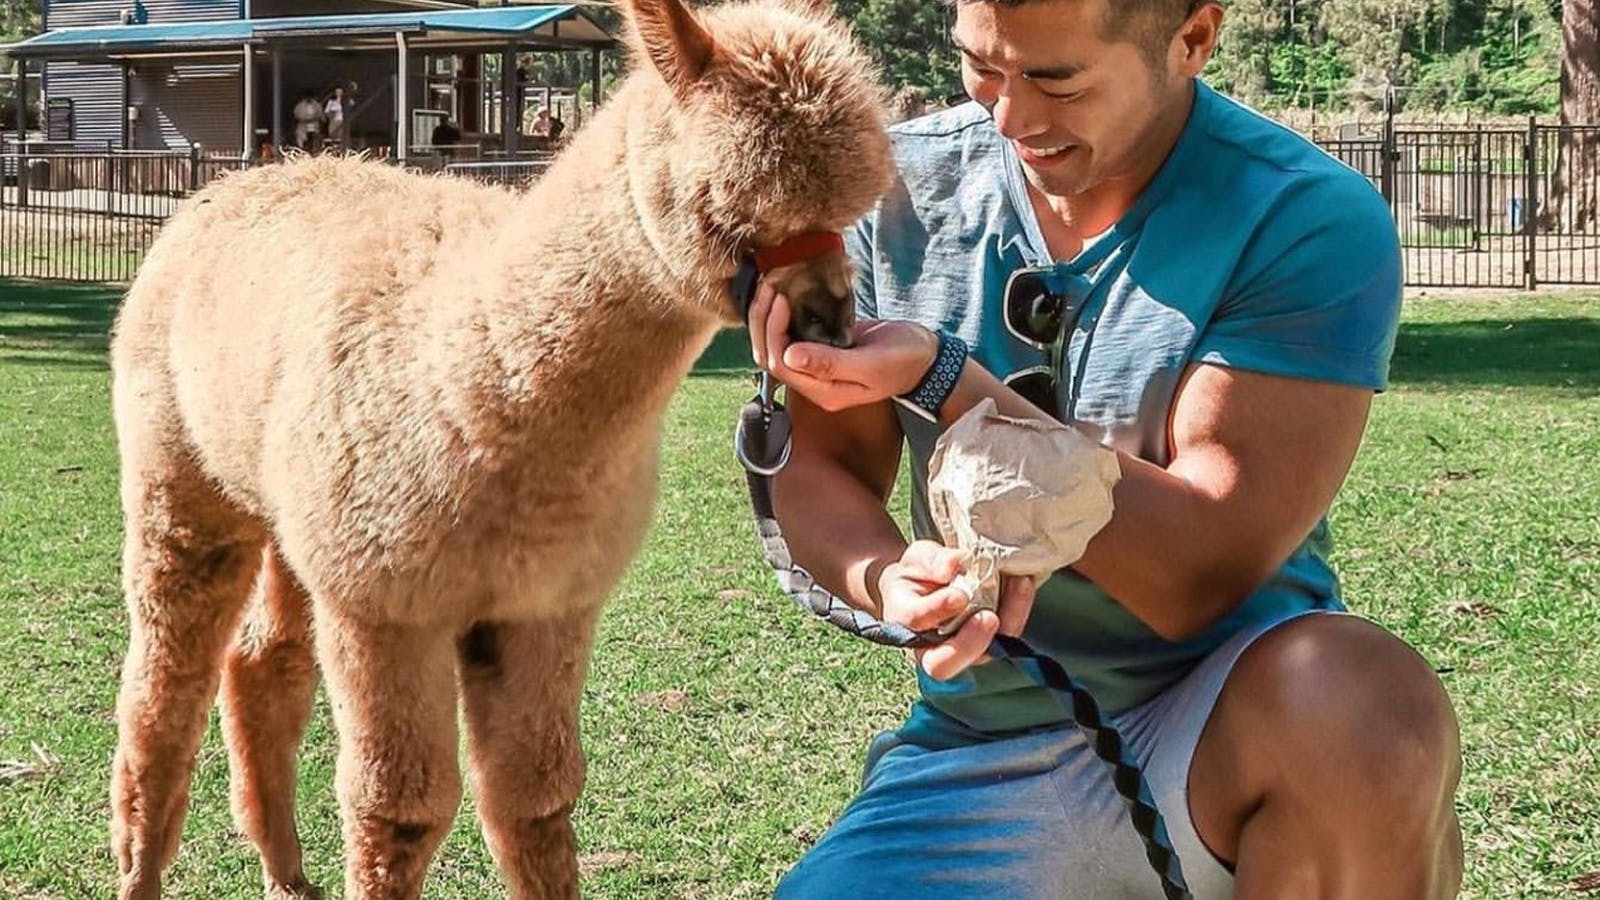 Feeding baby alpacas - just perfect!